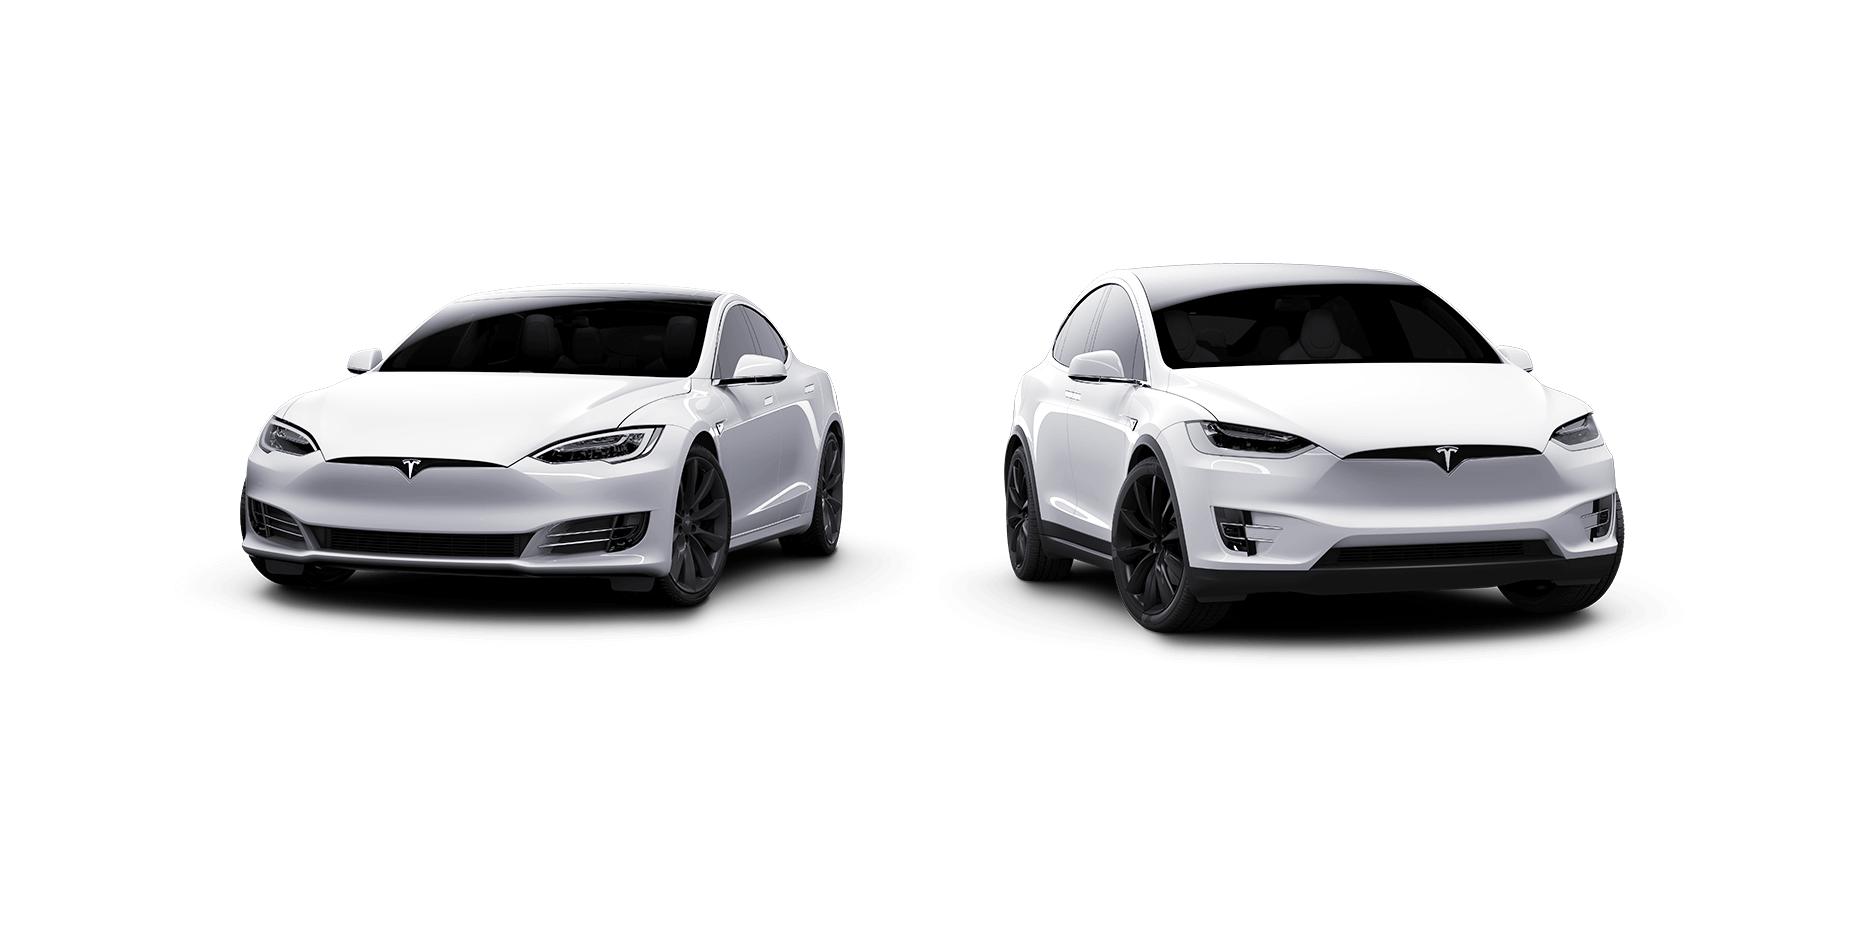 Double Tesla Cars Collision